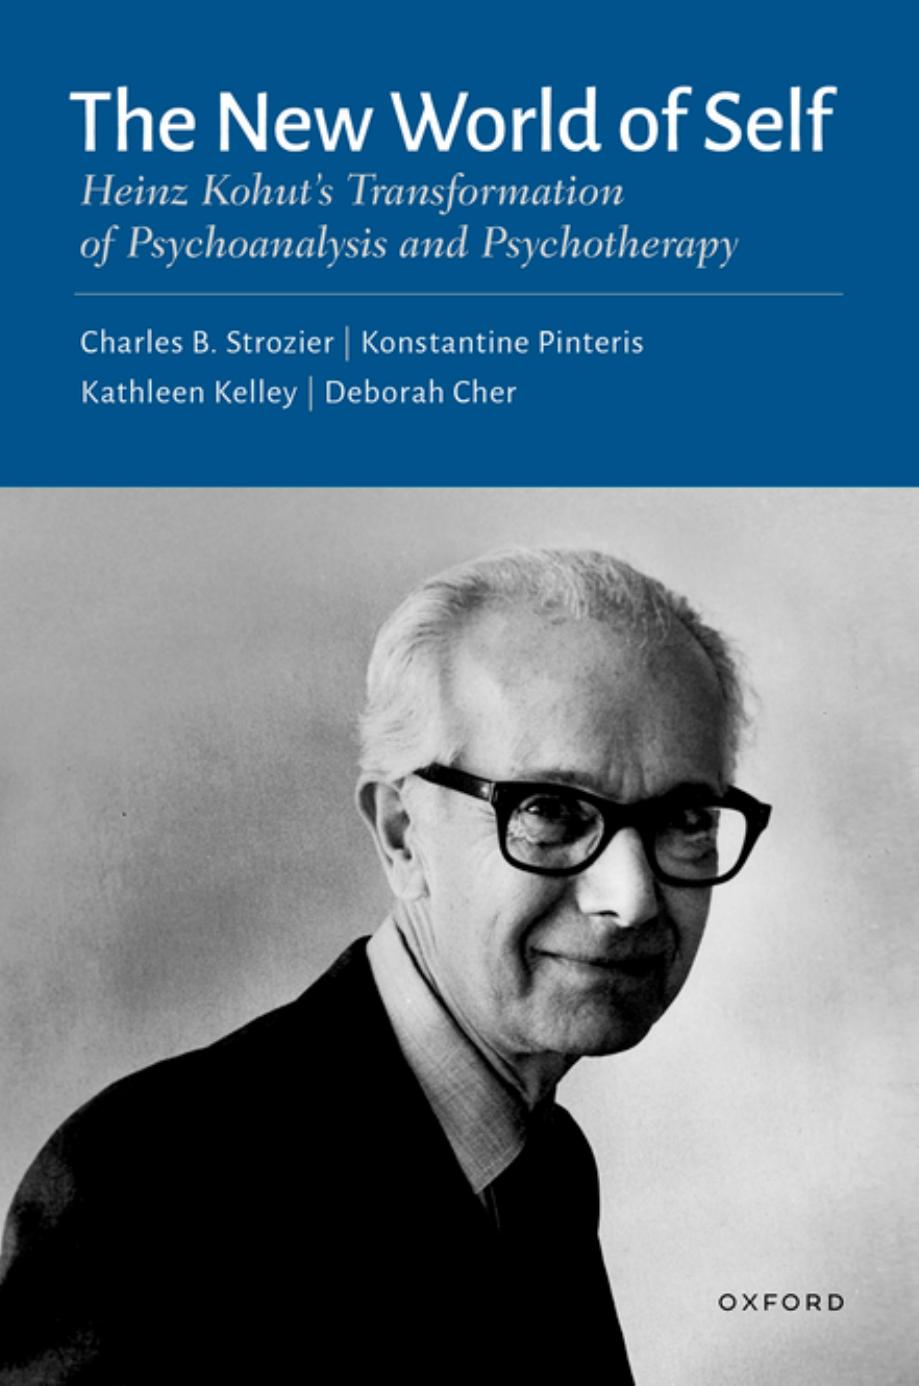 The New World of Self: Heinz Kohut's Transformation of Psychoanalysis and Psychotherapy by Charles B. Strozier Konstantine Pinteris Kathleen Kelley Deborah Cher